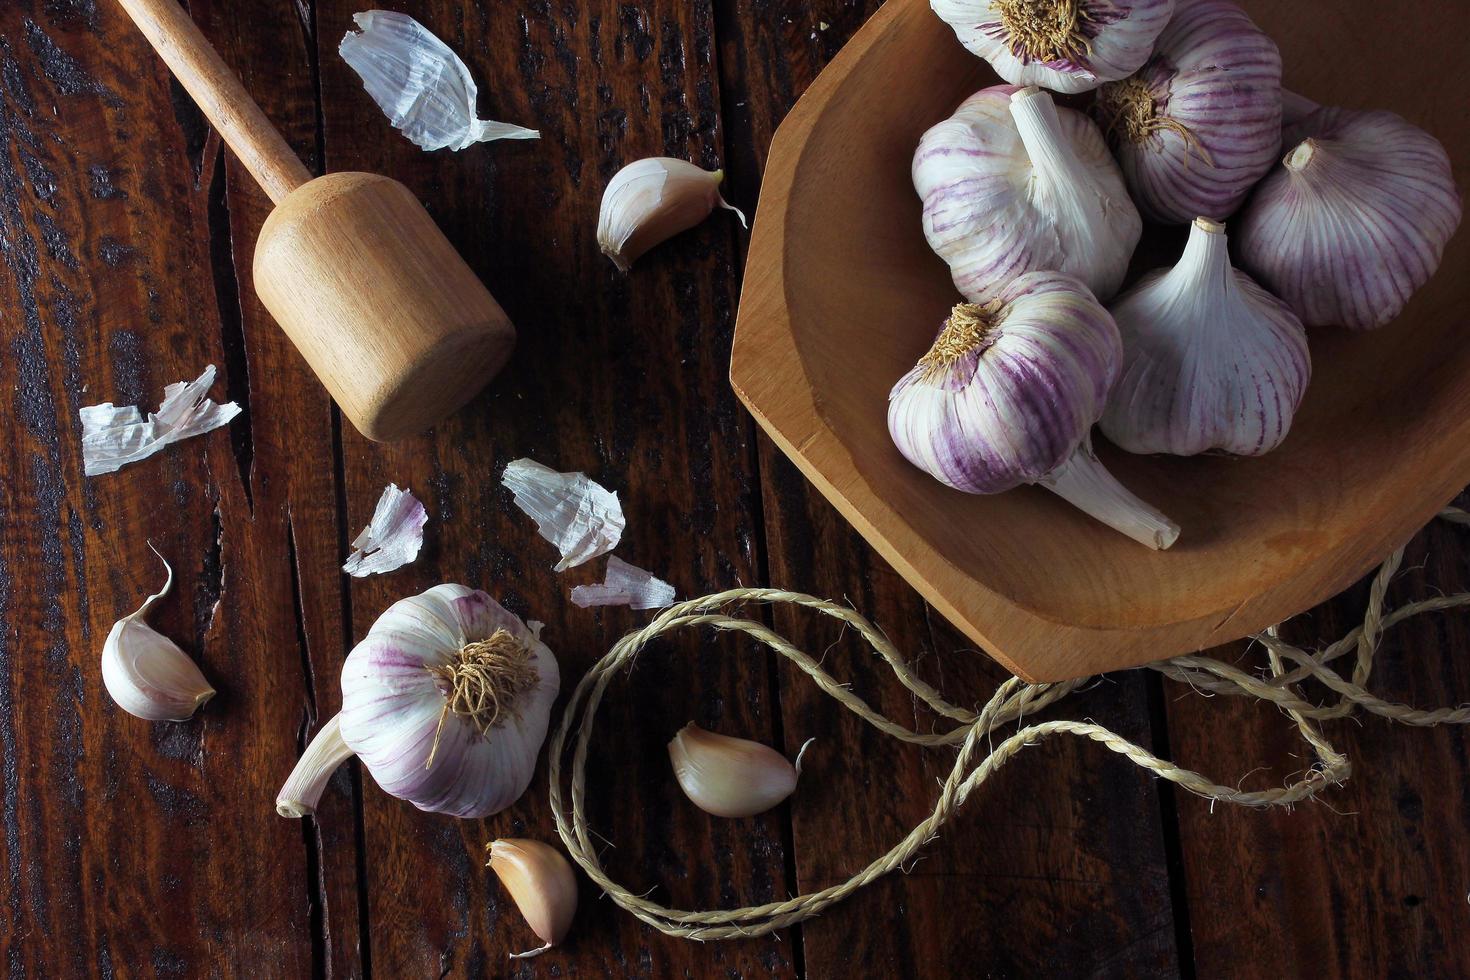 Garlic bulbs inside rustic wooden bowl on rustic wooden table. Closeup of garlic photo